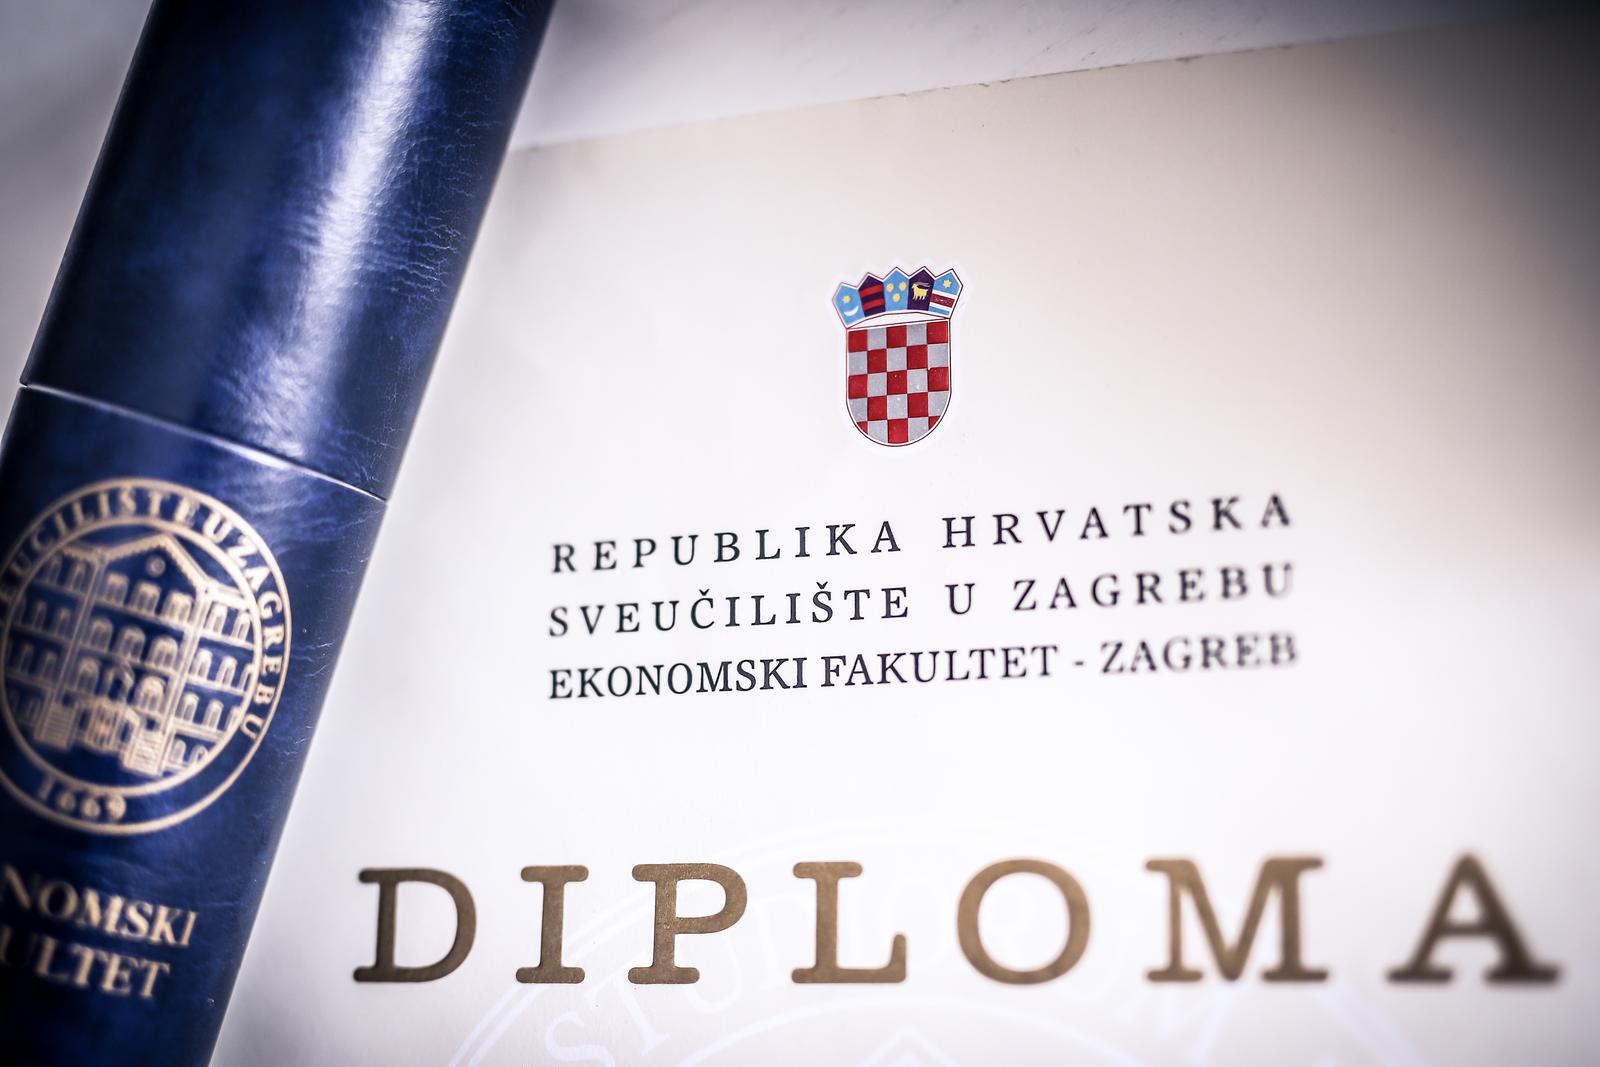 14.05.2018., Zagreb - Diploma Ekonomskog fakulteta Sveucilista u Zagrebu. "n"nPhoto: Igor Soban/PIXSELL